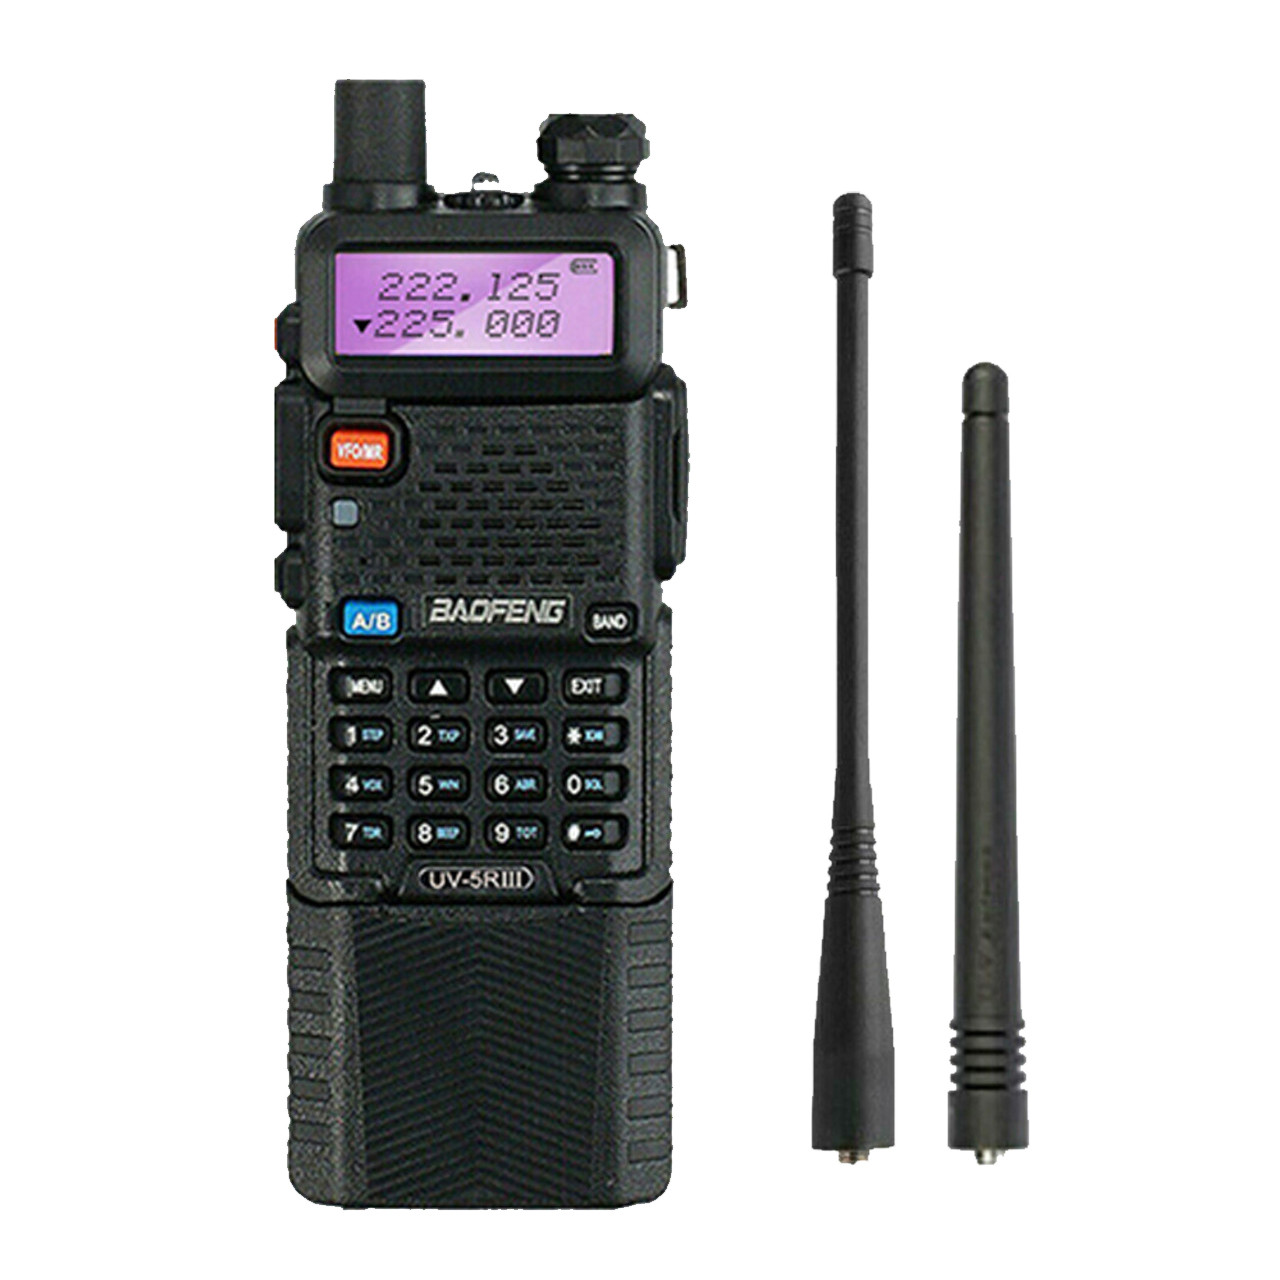 Baofeng UV-5R III Tri-Band VHF/UHF 136-174/220-260/400-520MHz Walkie Talkie  Two Way Radio